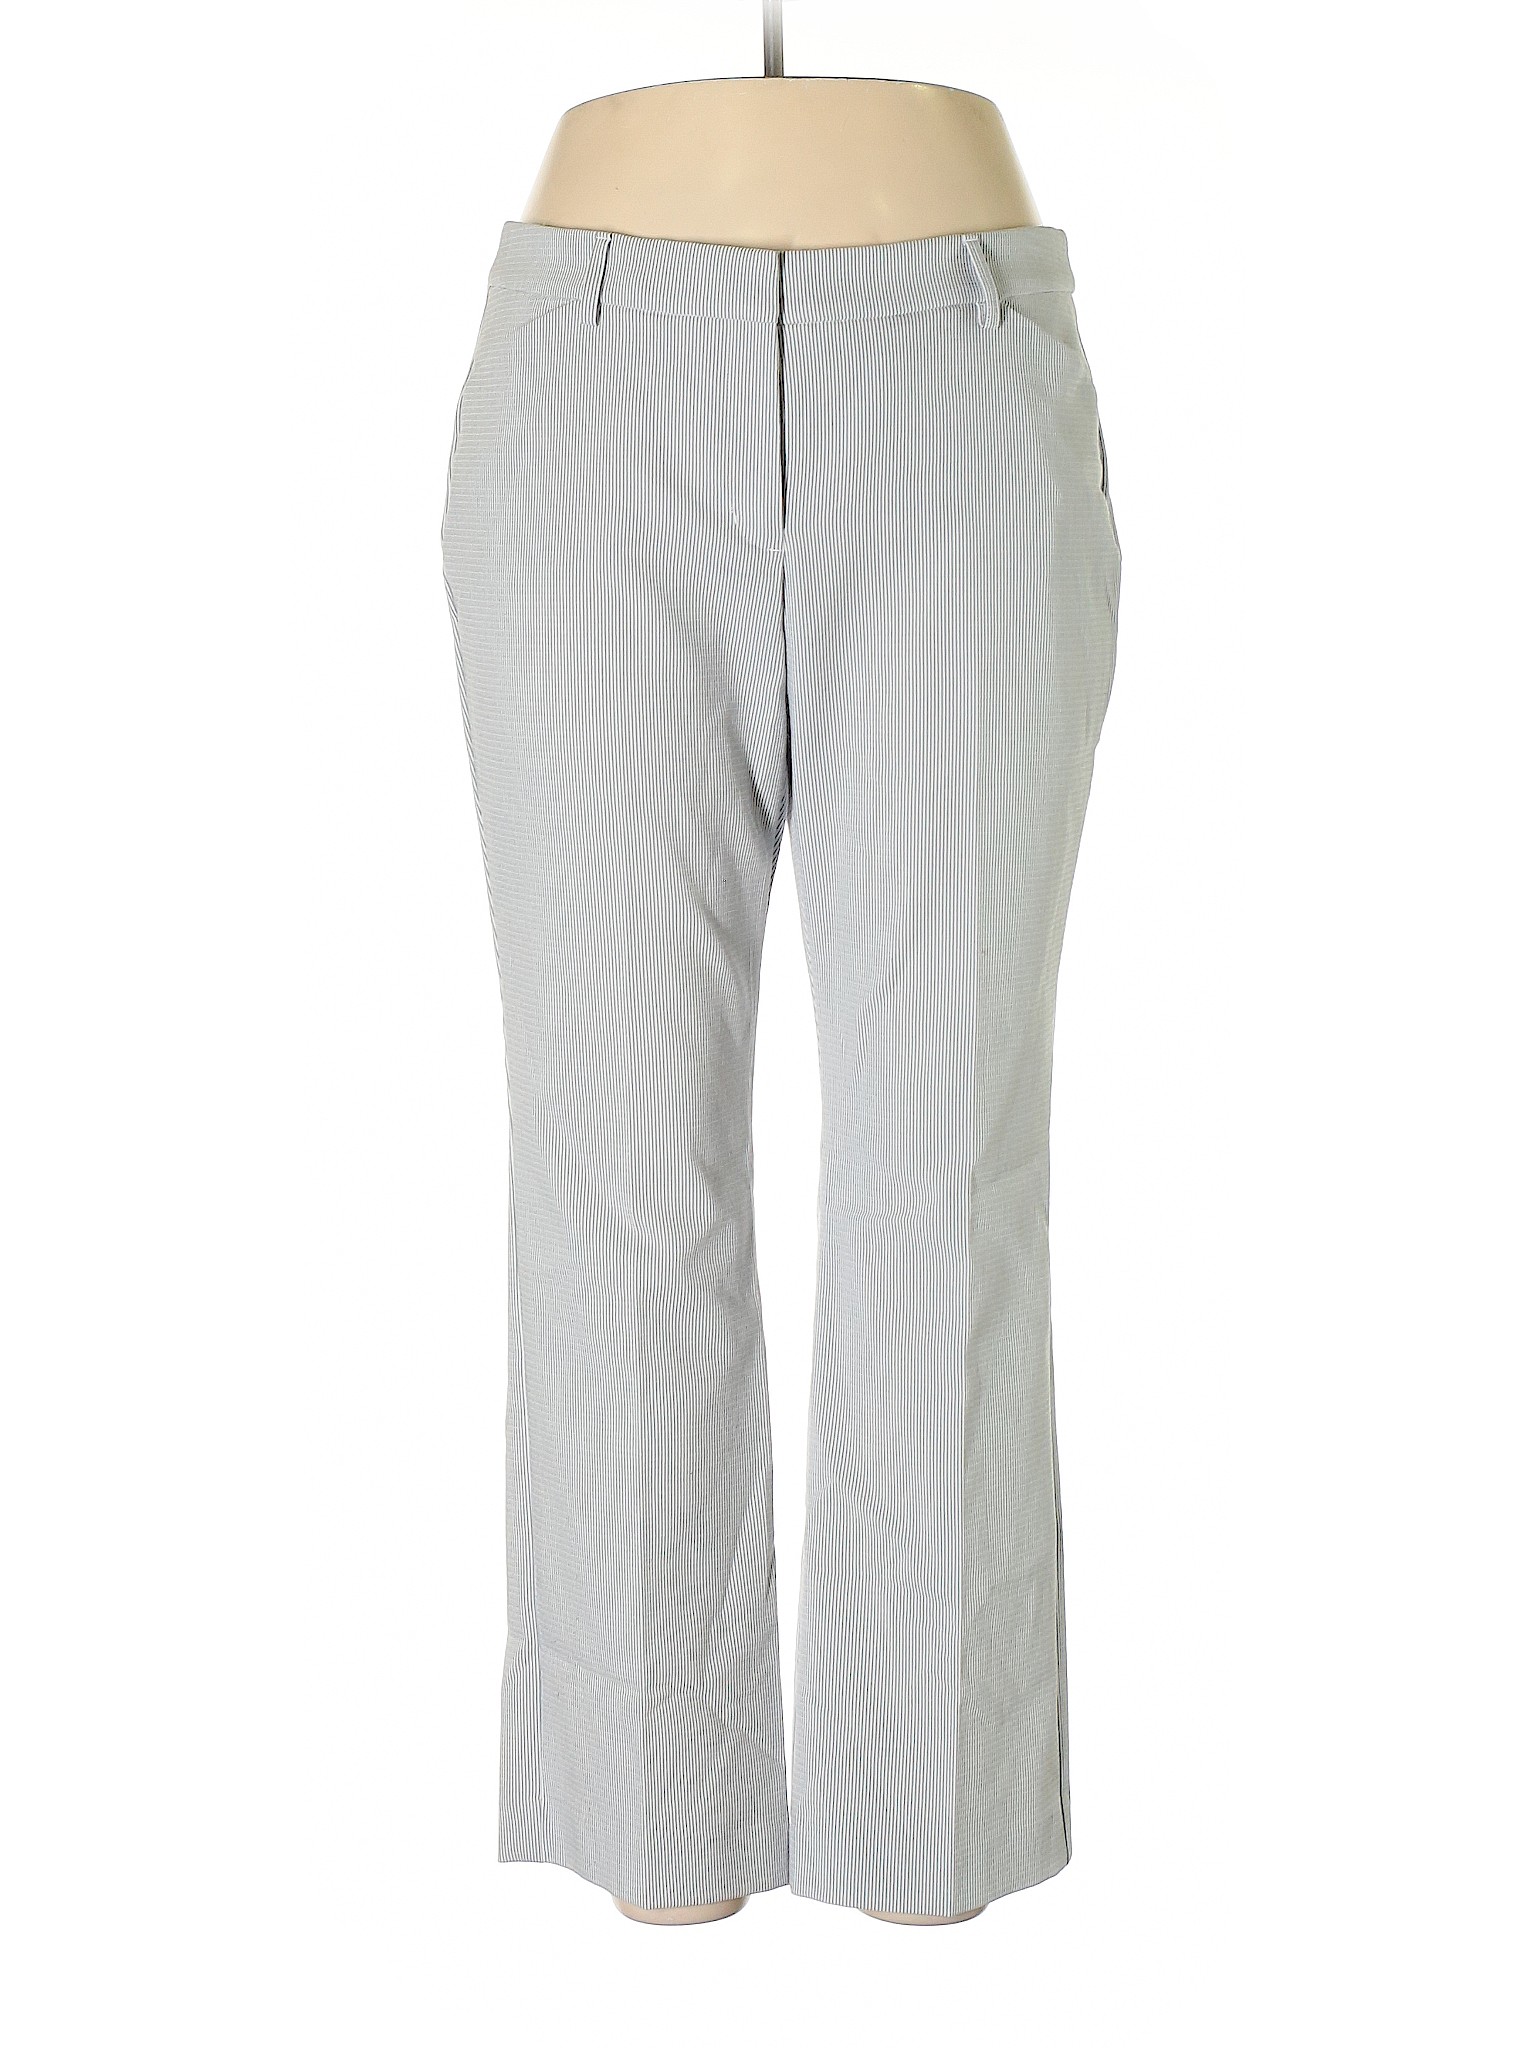 Express Stripes Gray White Dress Pants Size 14 - 79% off | thredUP